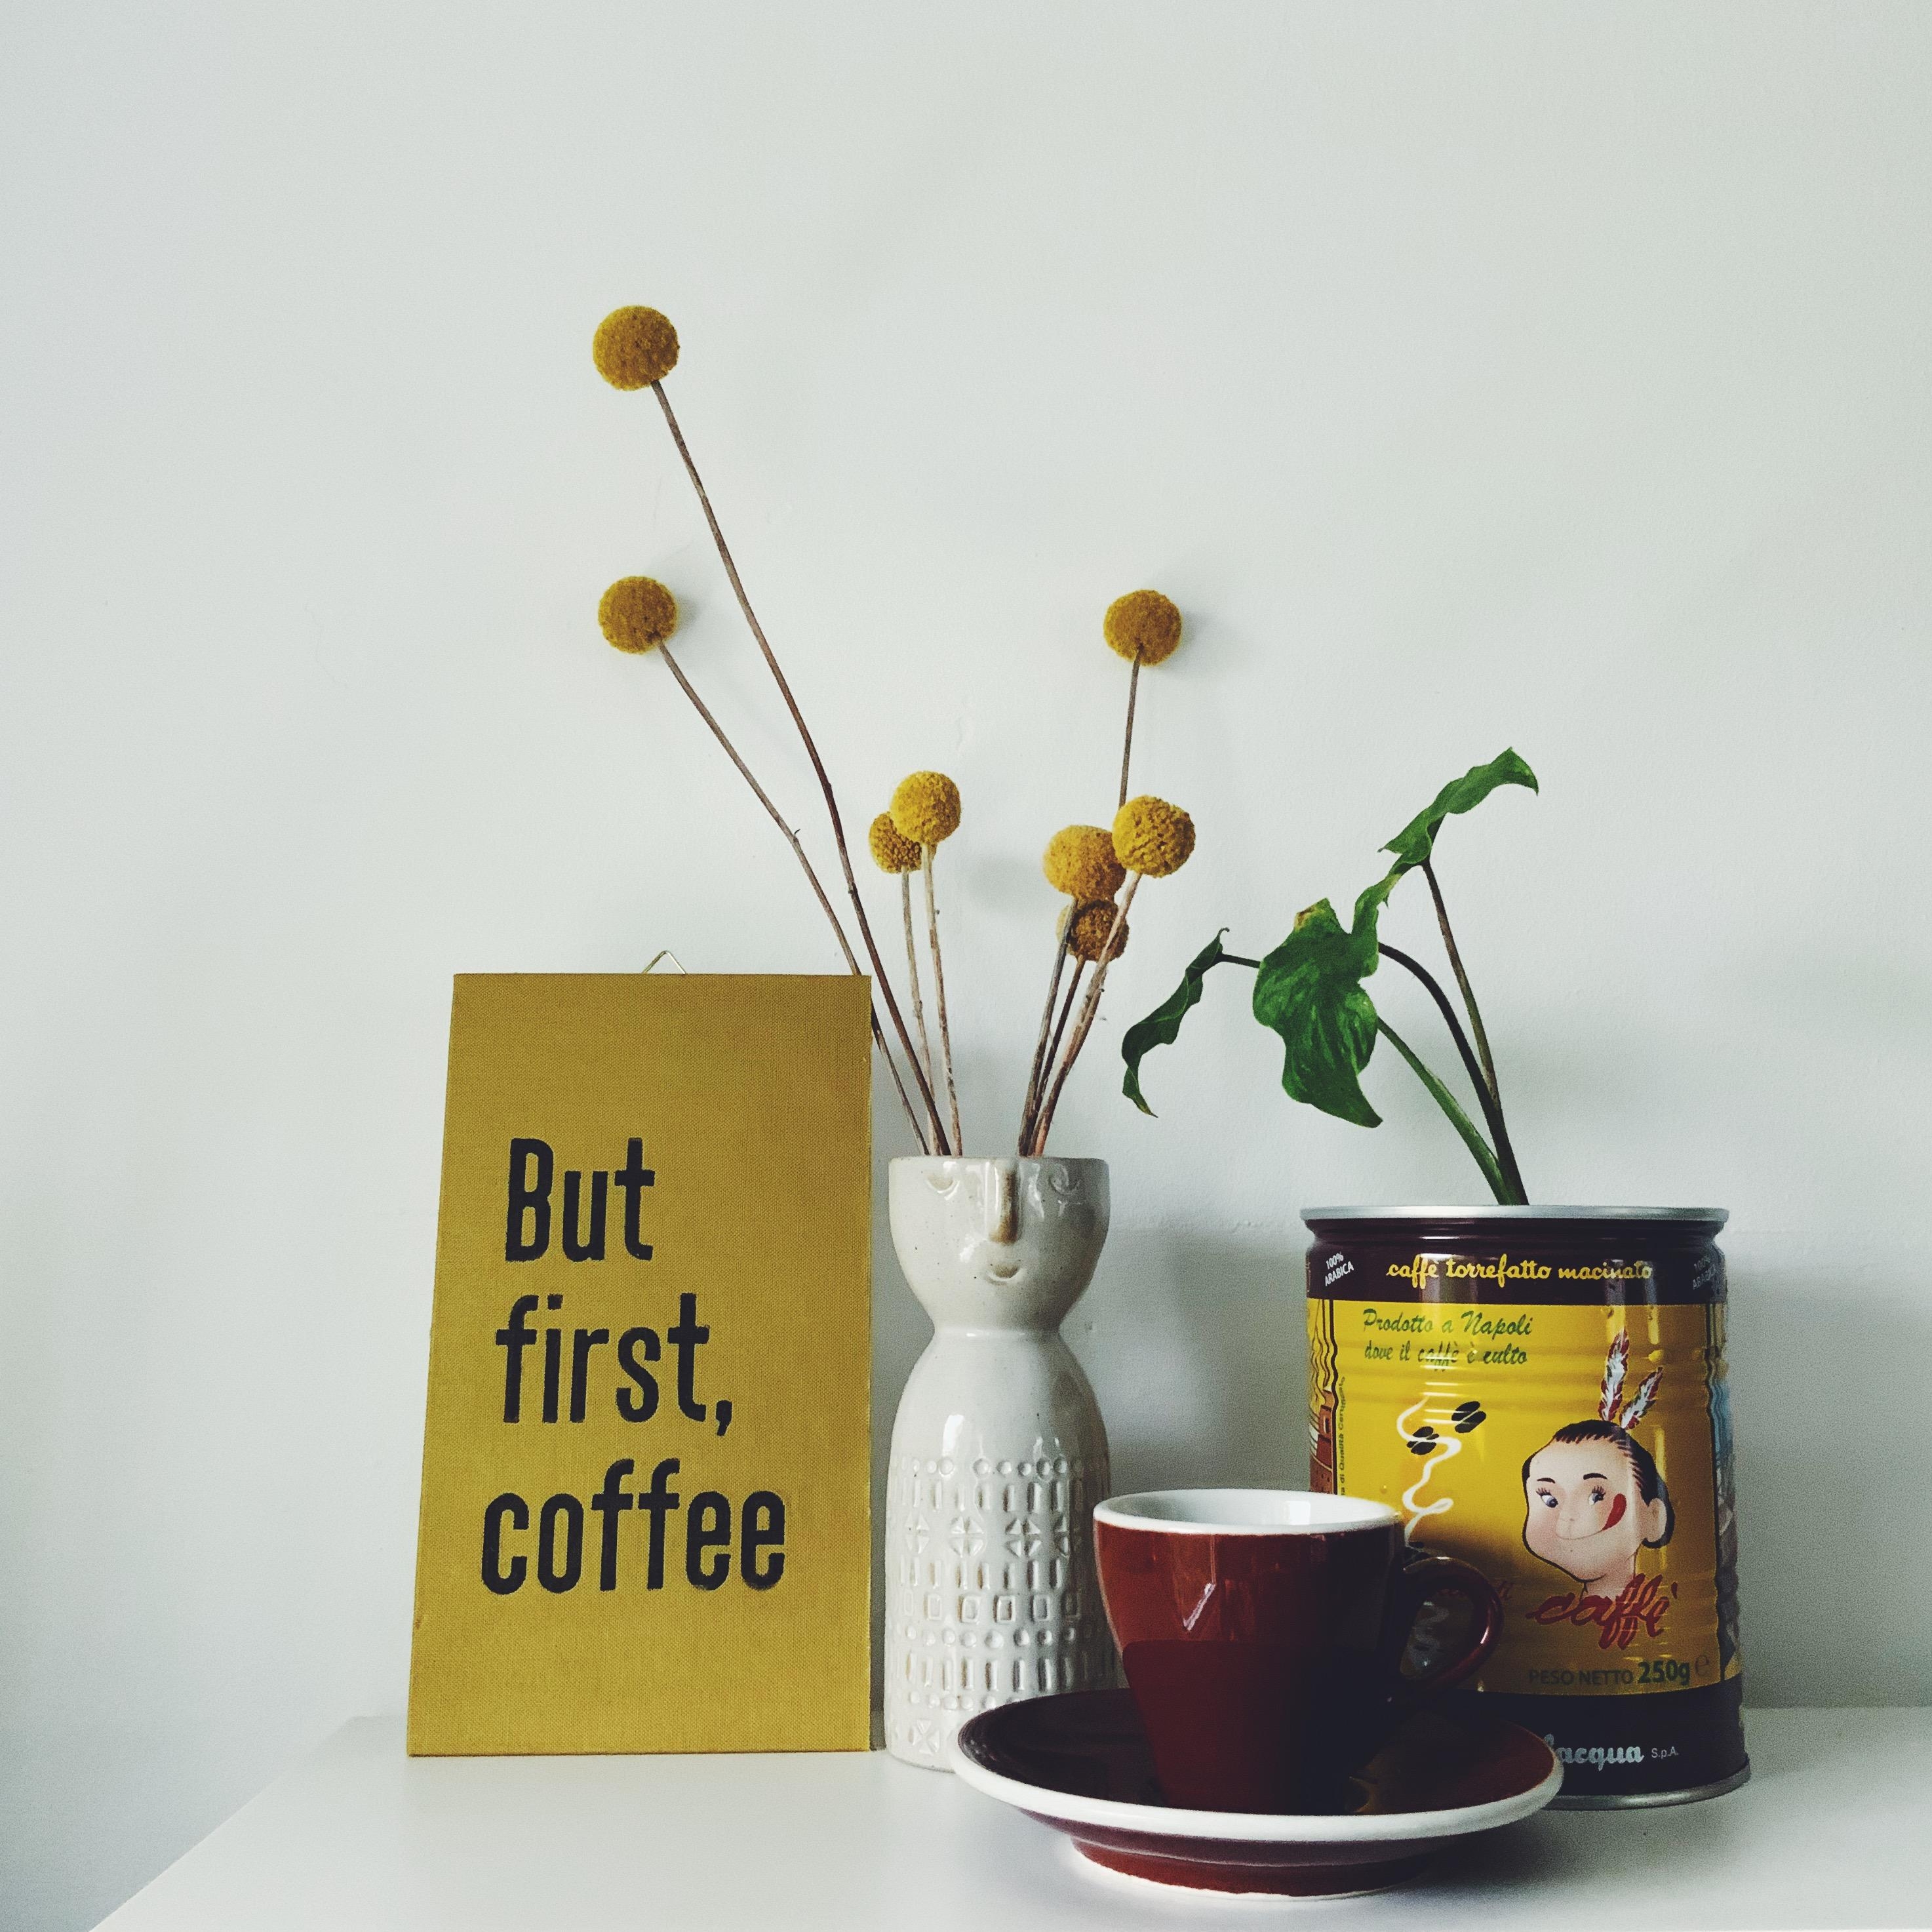 #foodchallenge #kaffeehilft #butfirstcoffee #letterpressprint